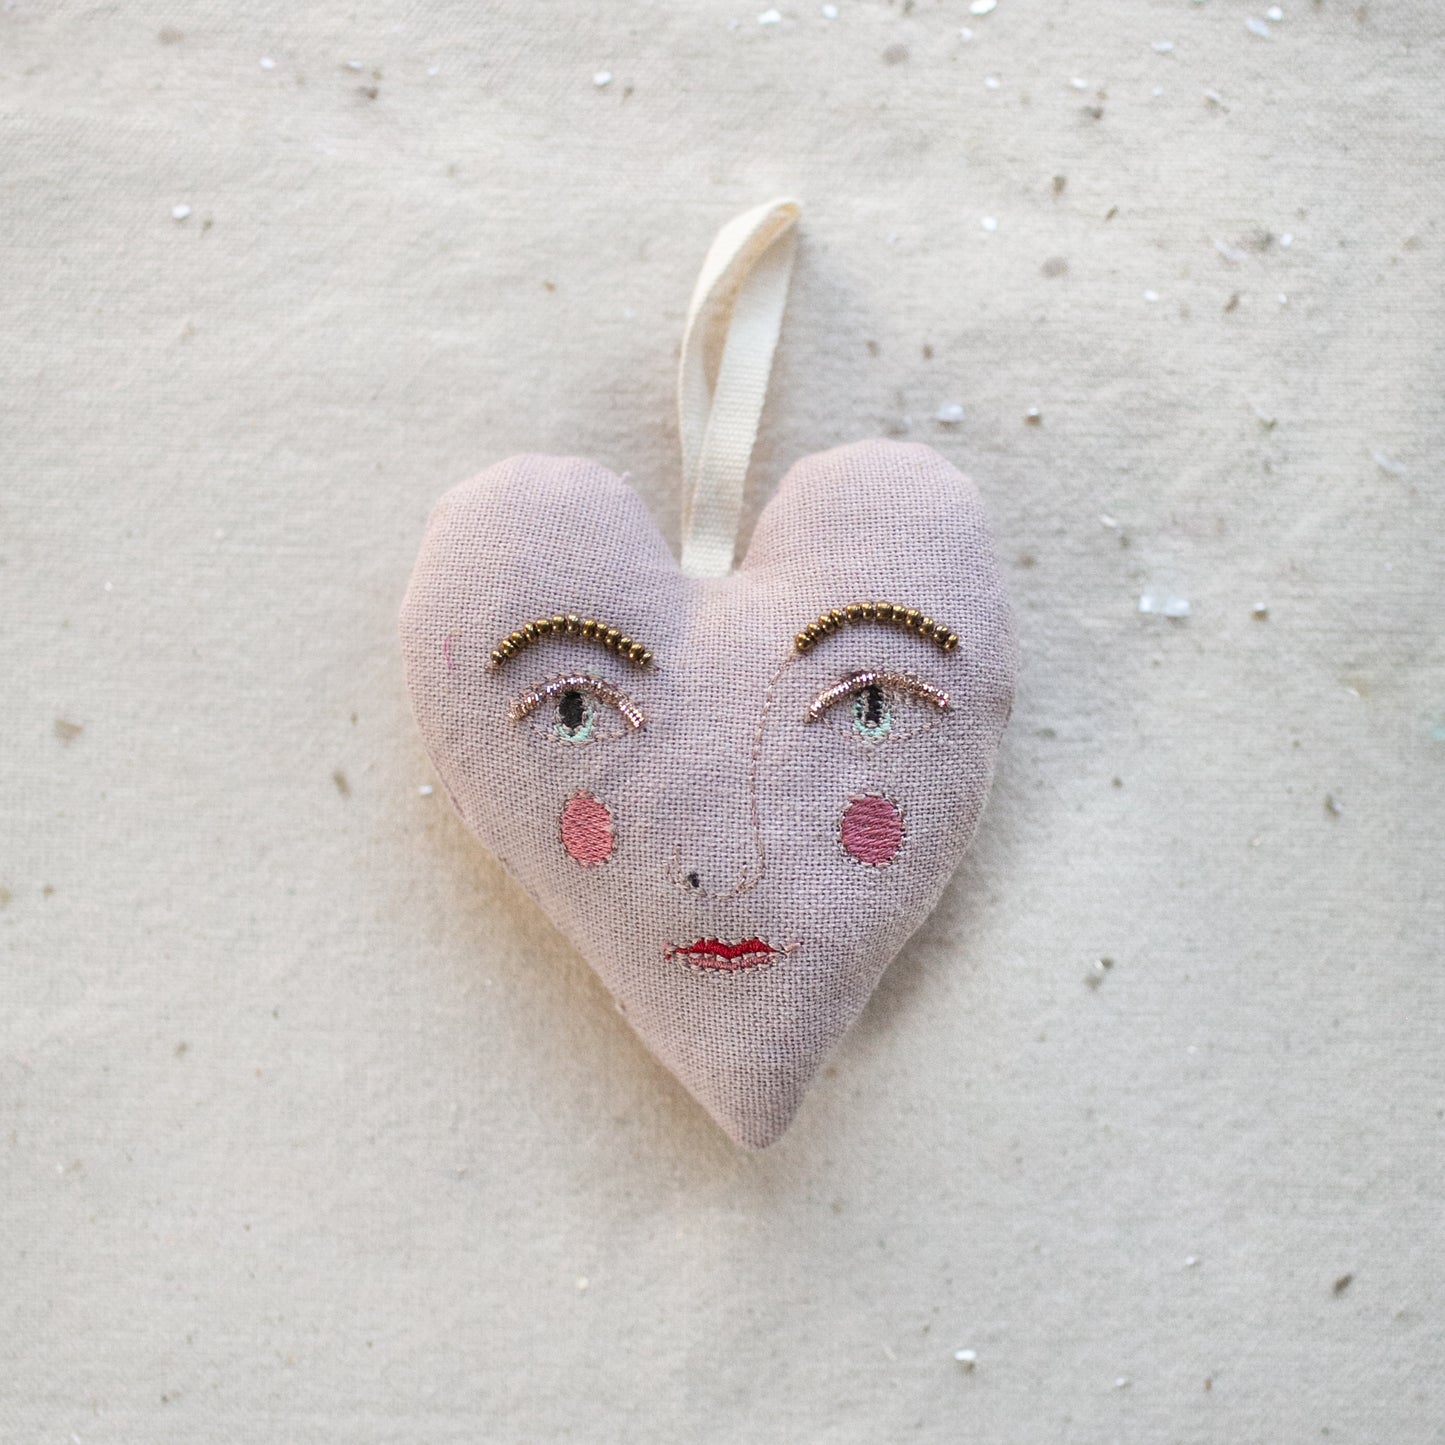 skippy cotton handsome heart lavender scented ornament